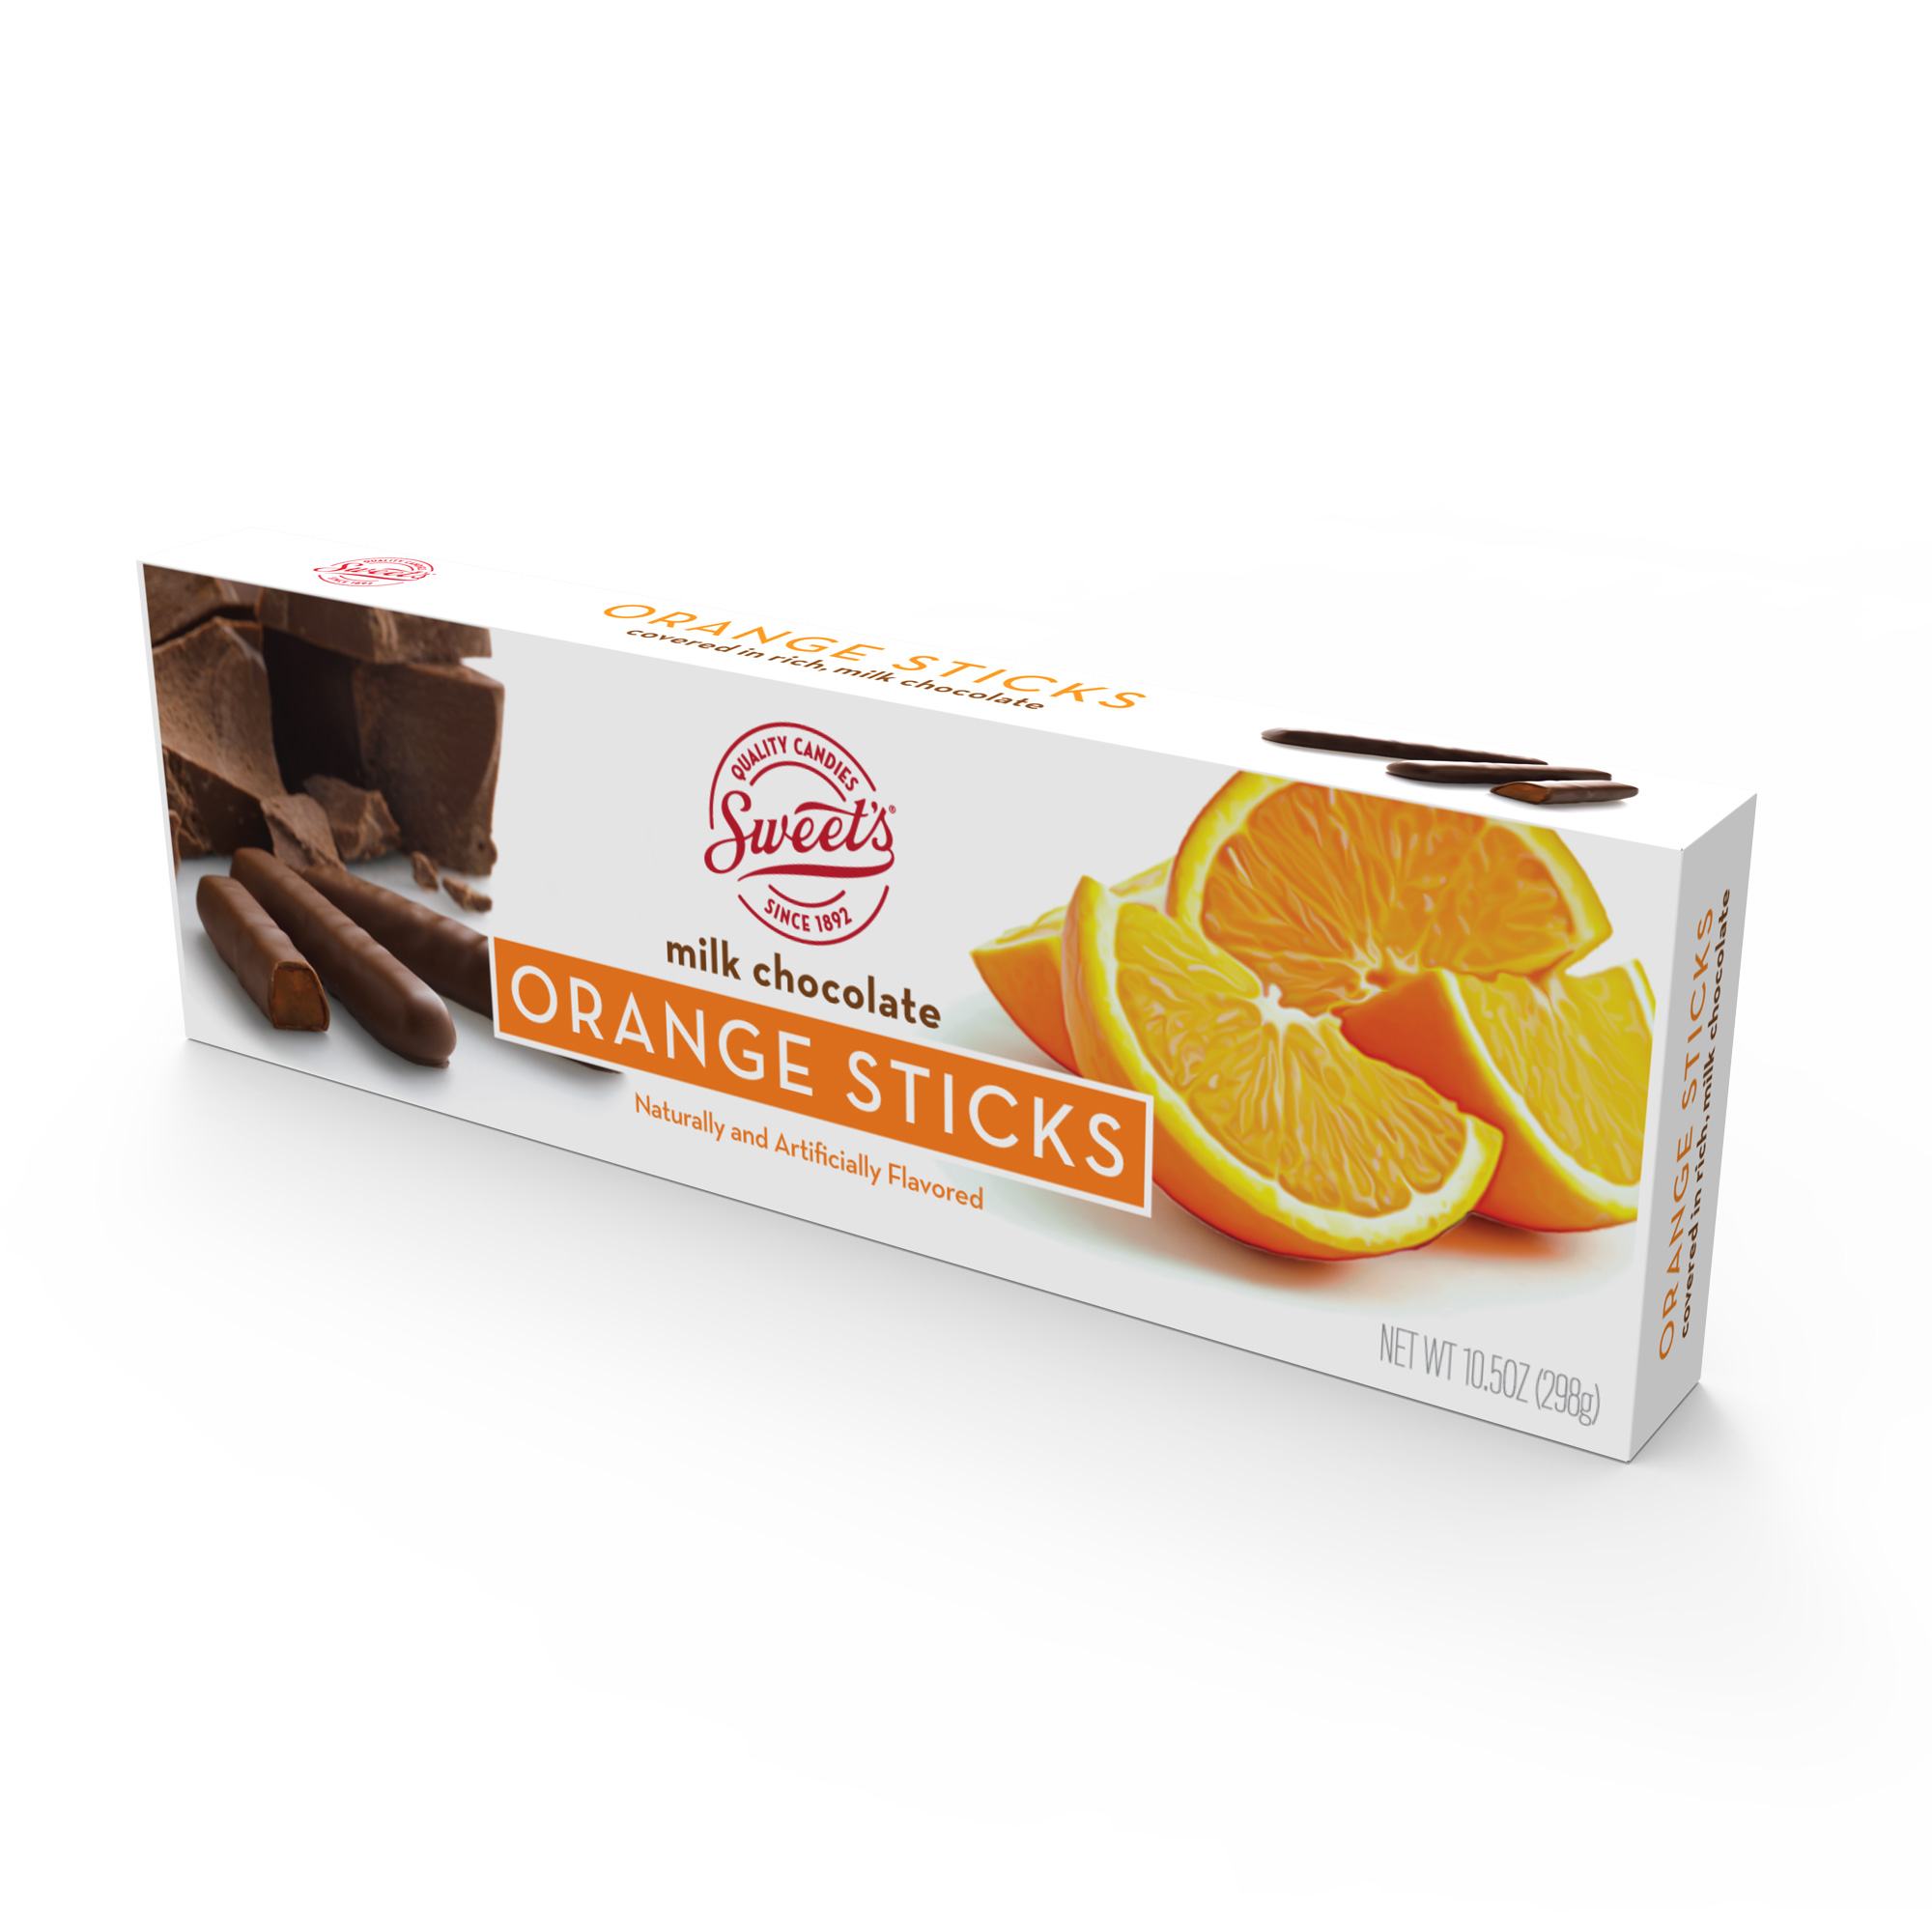 Sweet's Milk Chocolate Orange Sticks Box, 10.5 oz. - image 1 of 5